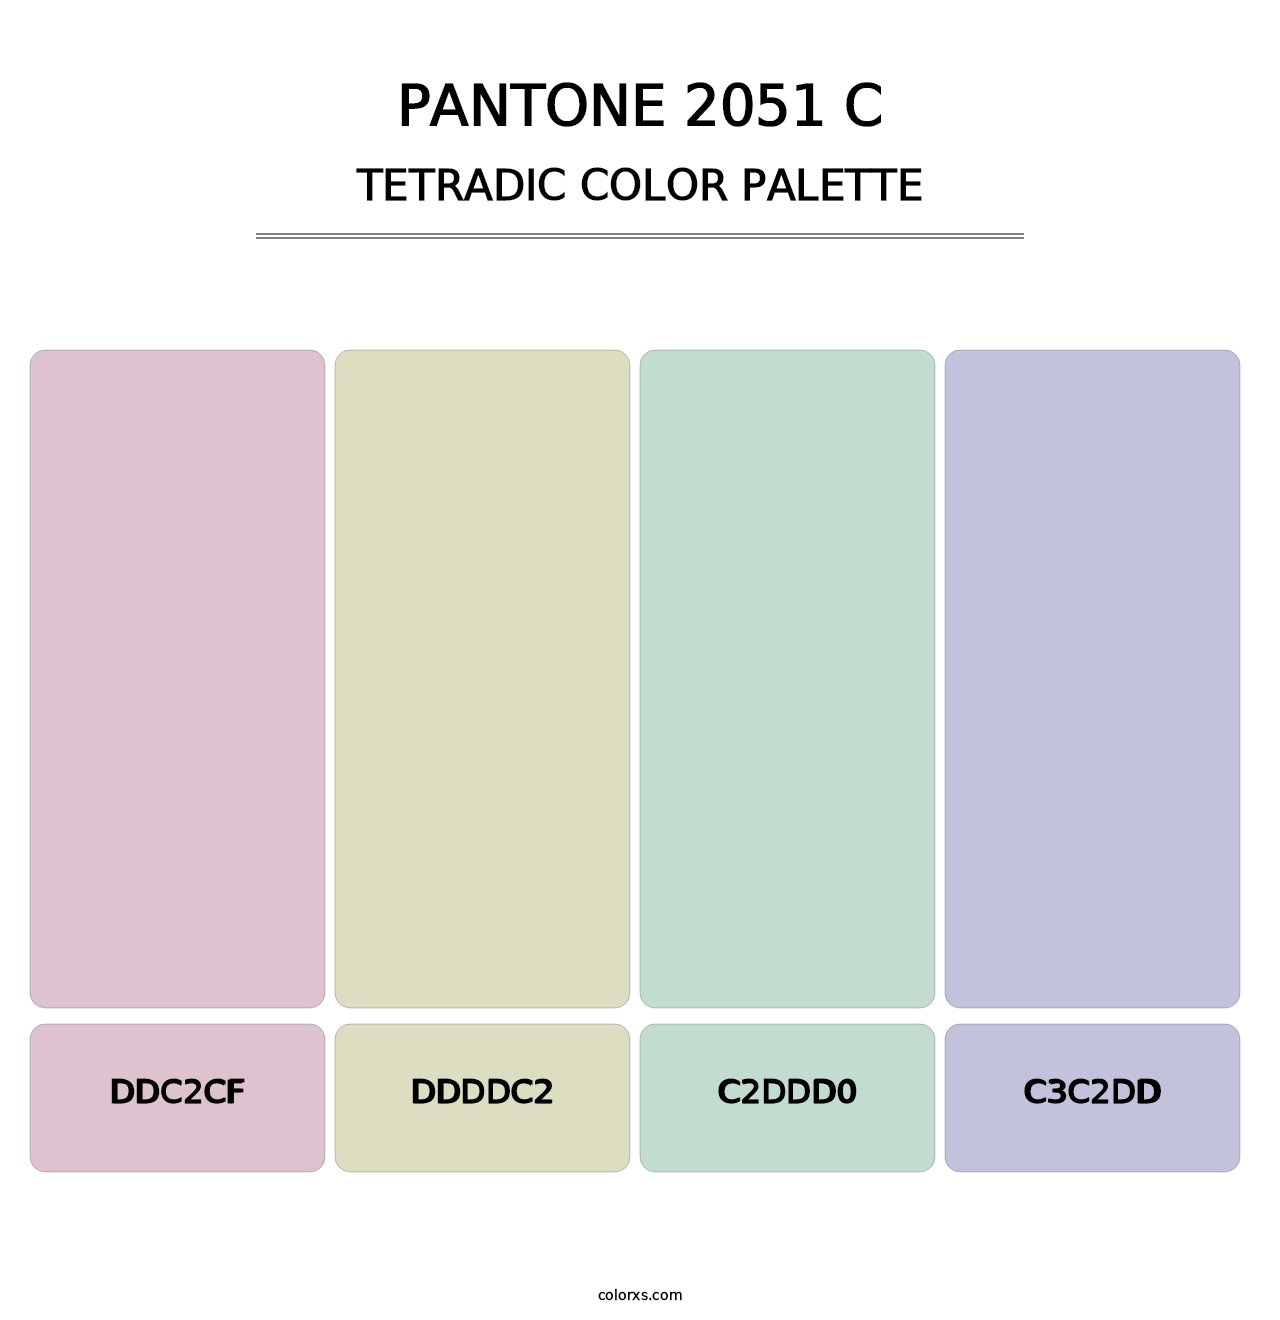 PANTONE 2051 C - Tetradic Color Palette